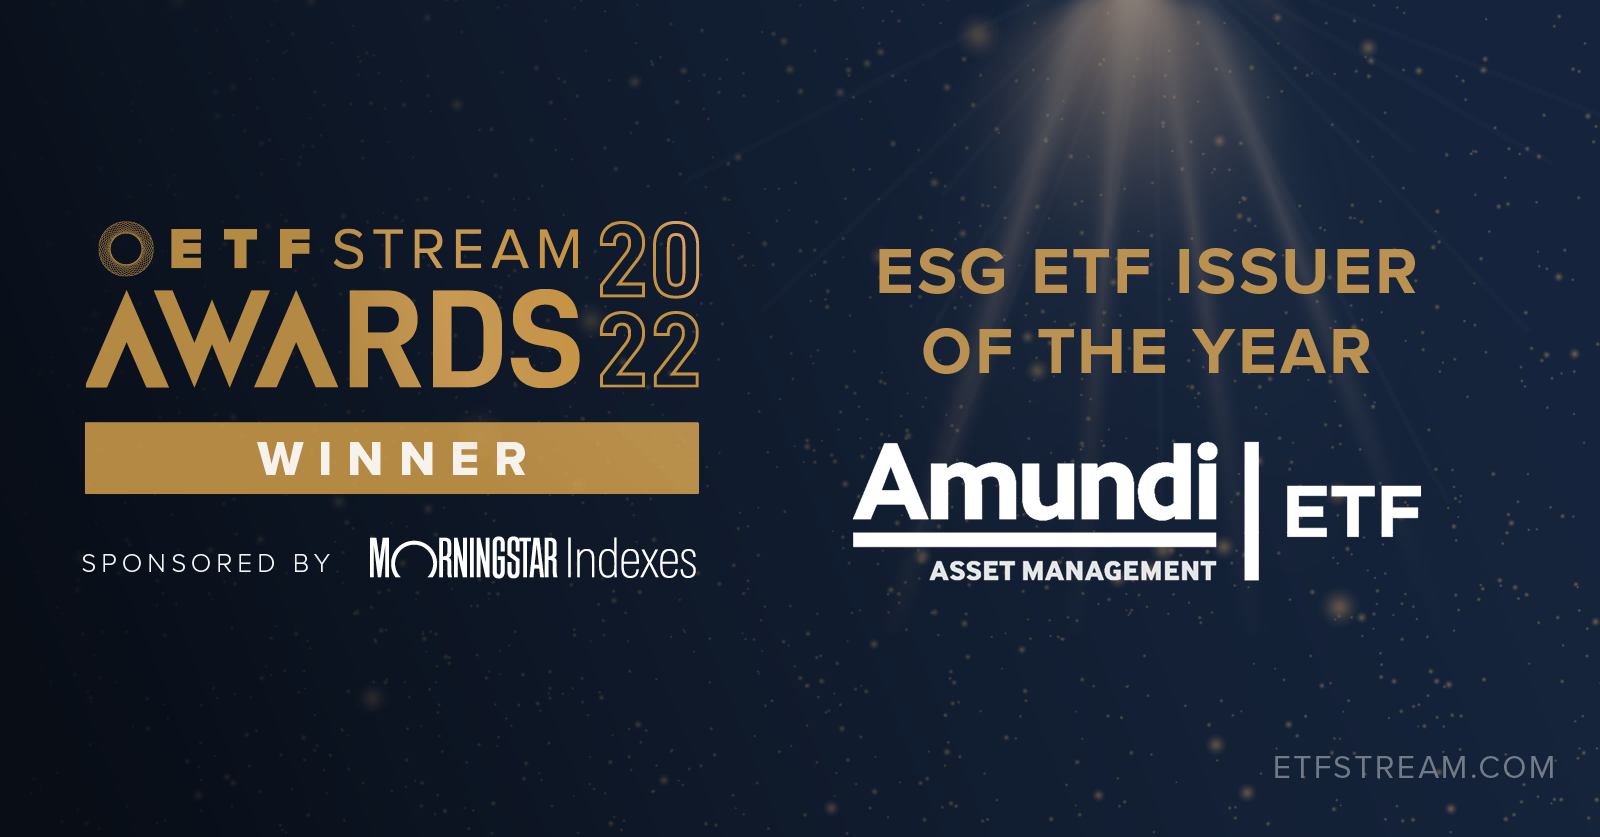 Amundi scoops top ESG ETF issuer award, again!